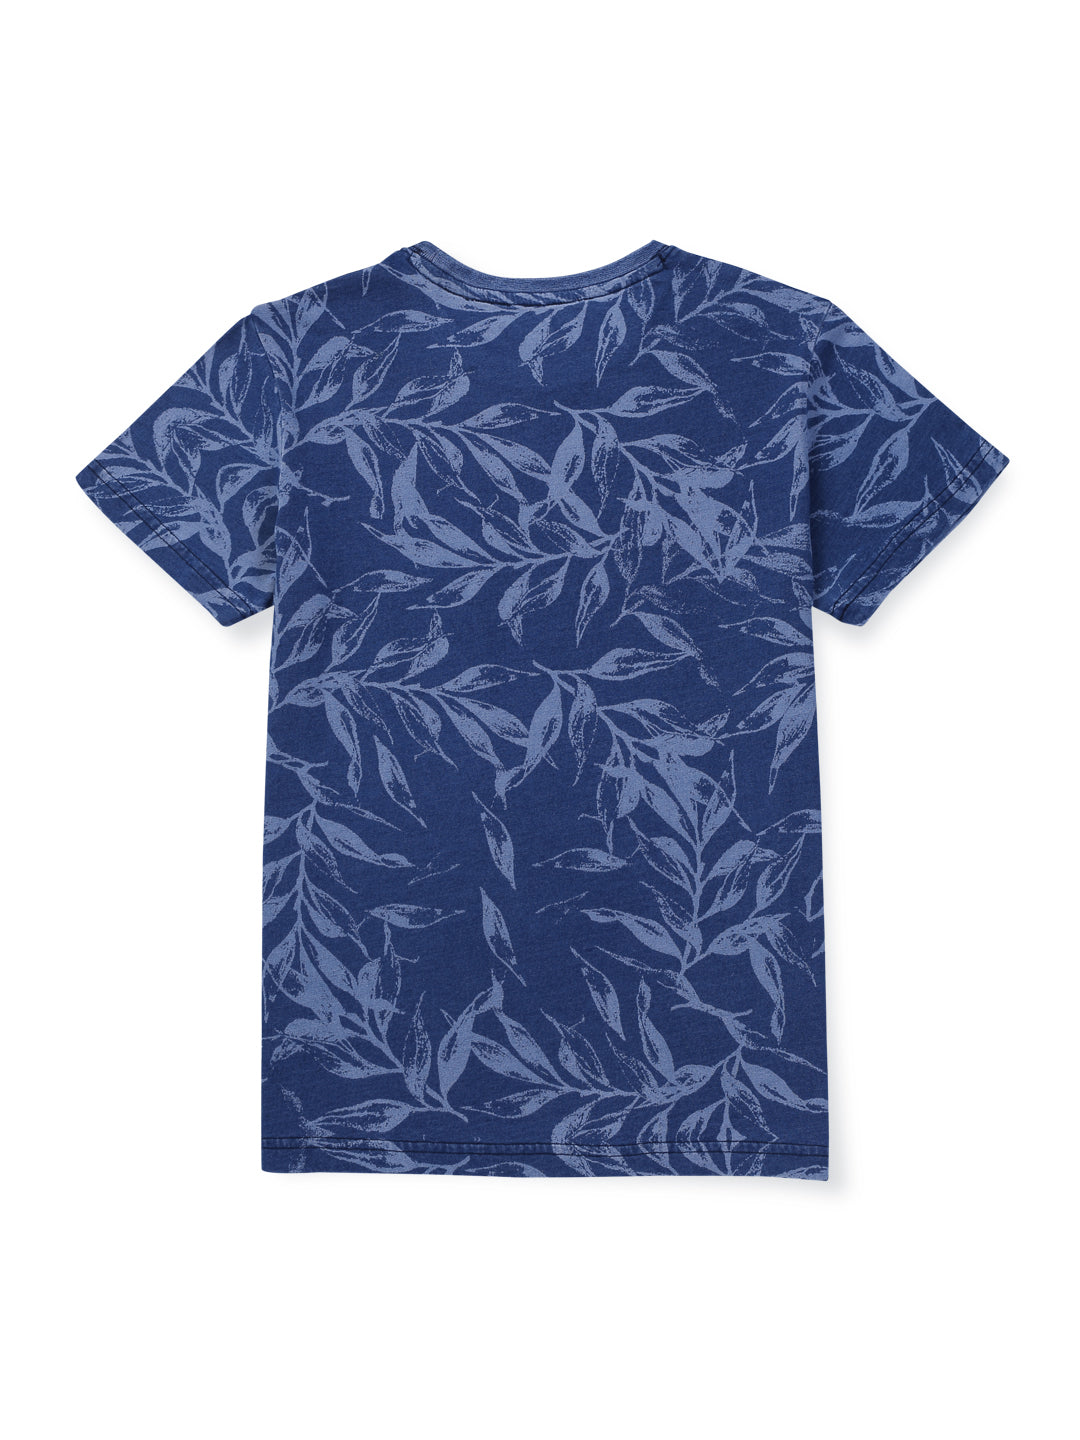 Boys Blue Cotton Printed T-Shirt